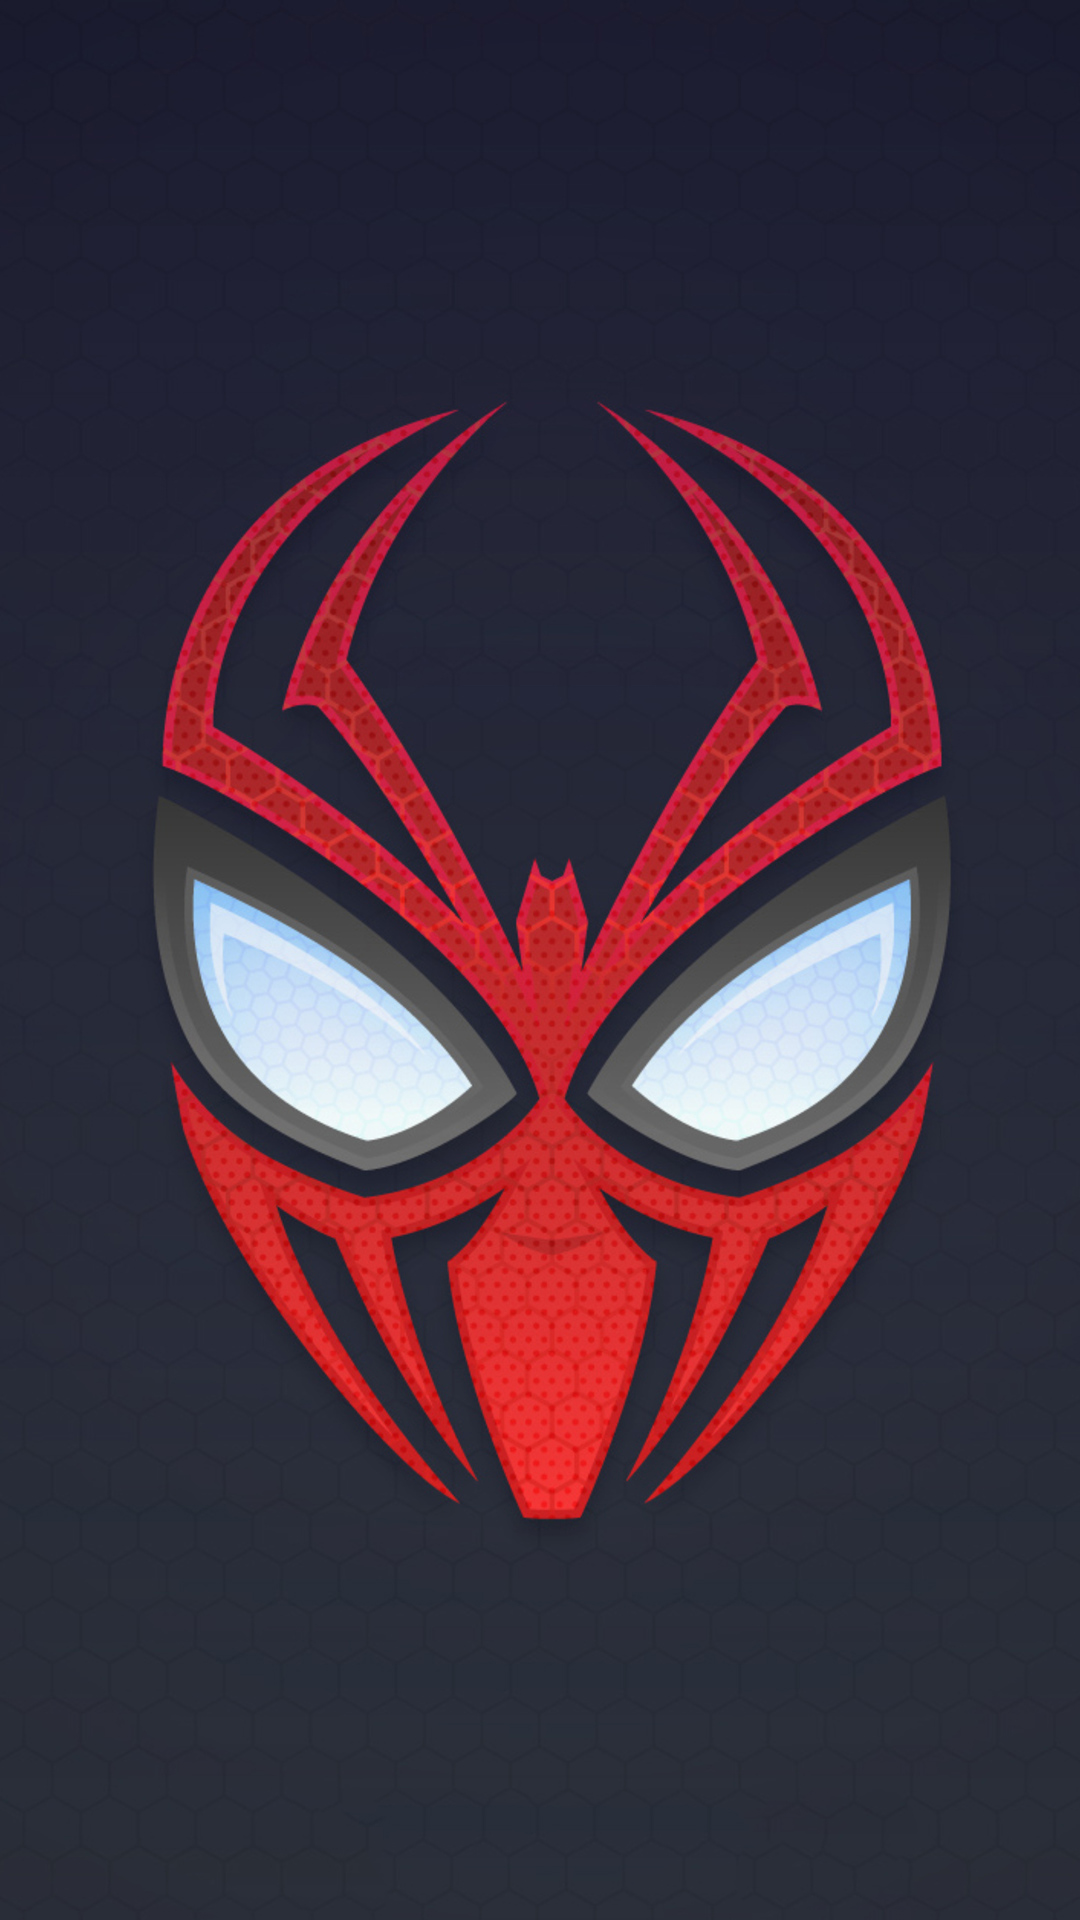 Spider Man Wallpaper 1